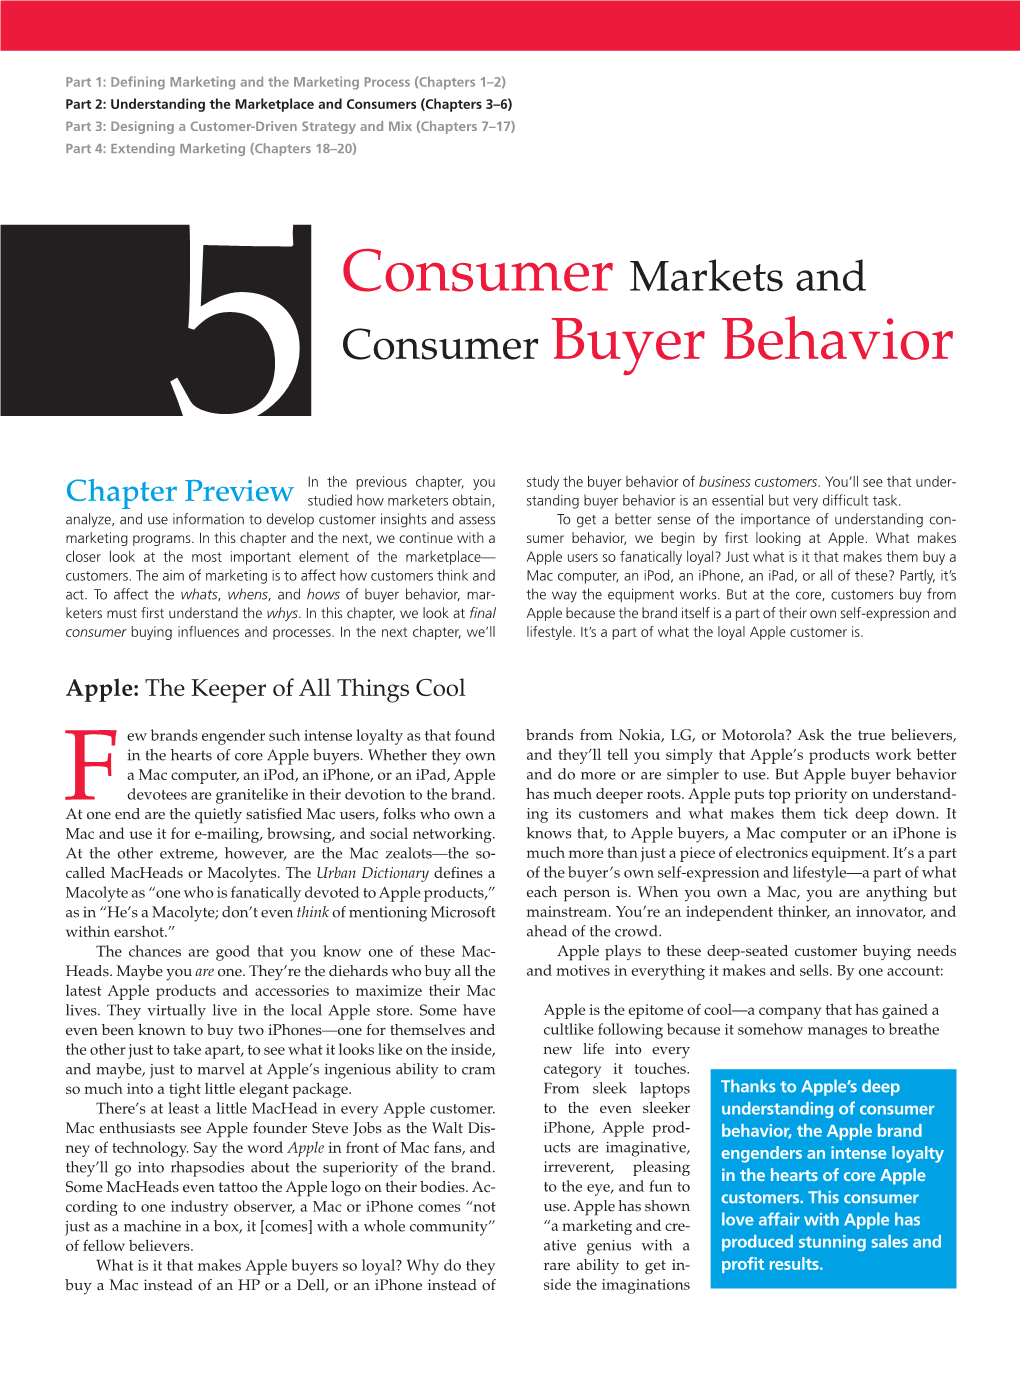 Consumer Buyer Behavior